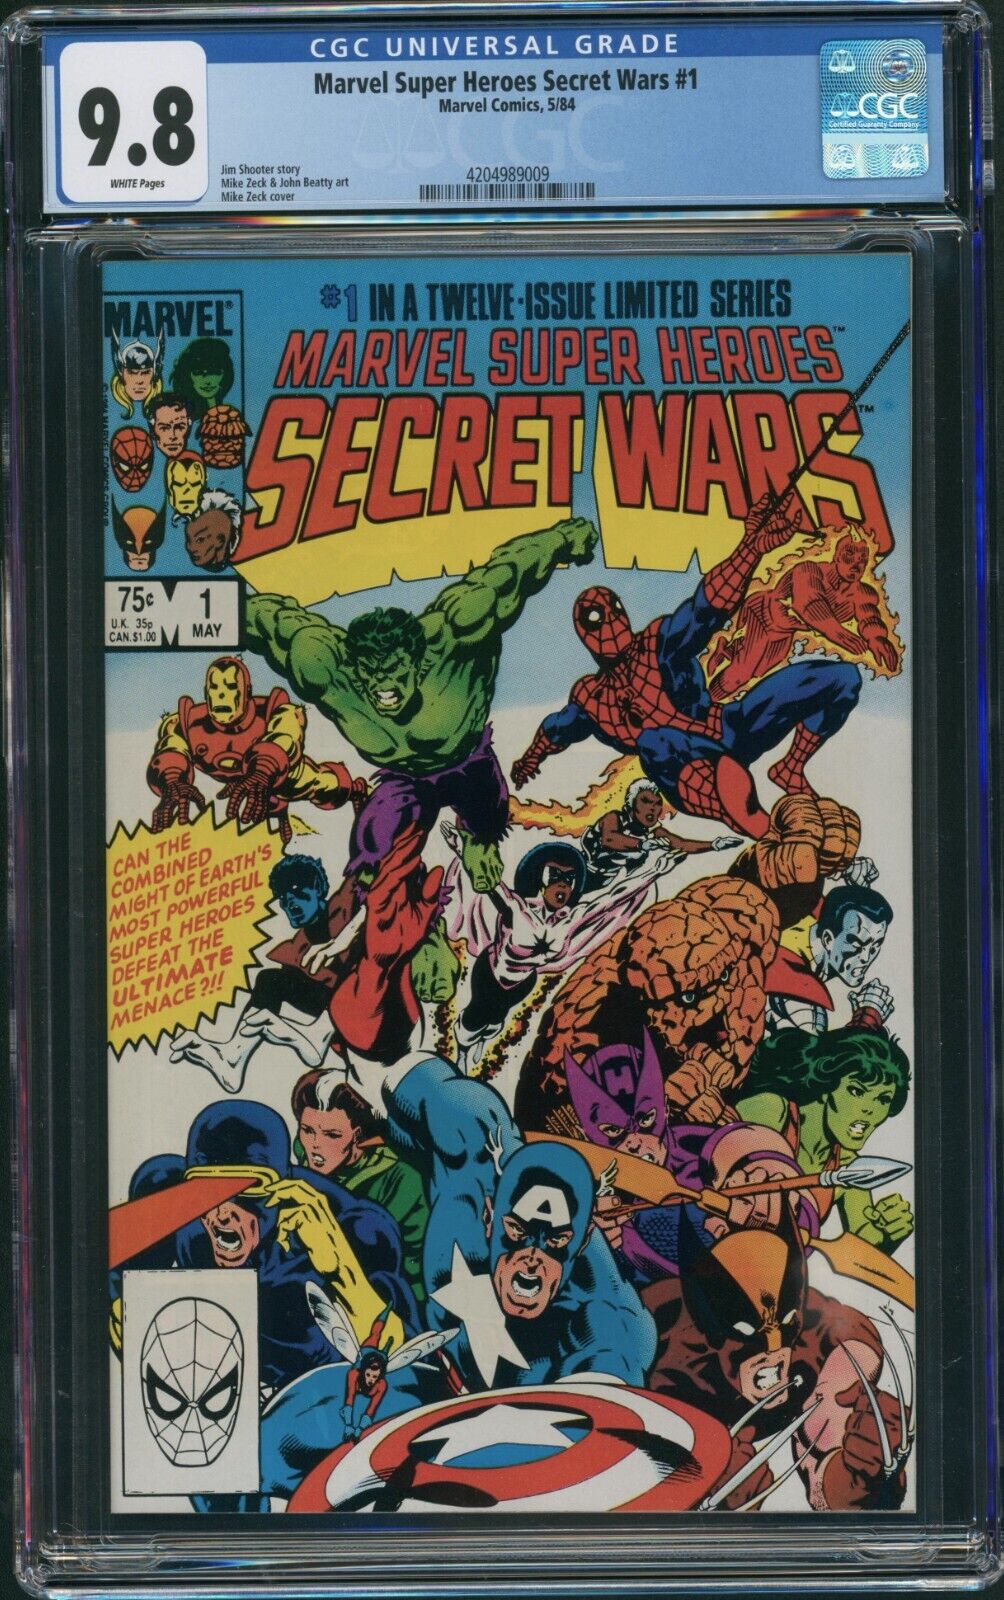 Marvel Super Heroes Secret Wars #1 (Marvel Comics, 1984) CGC 9.8 White pages